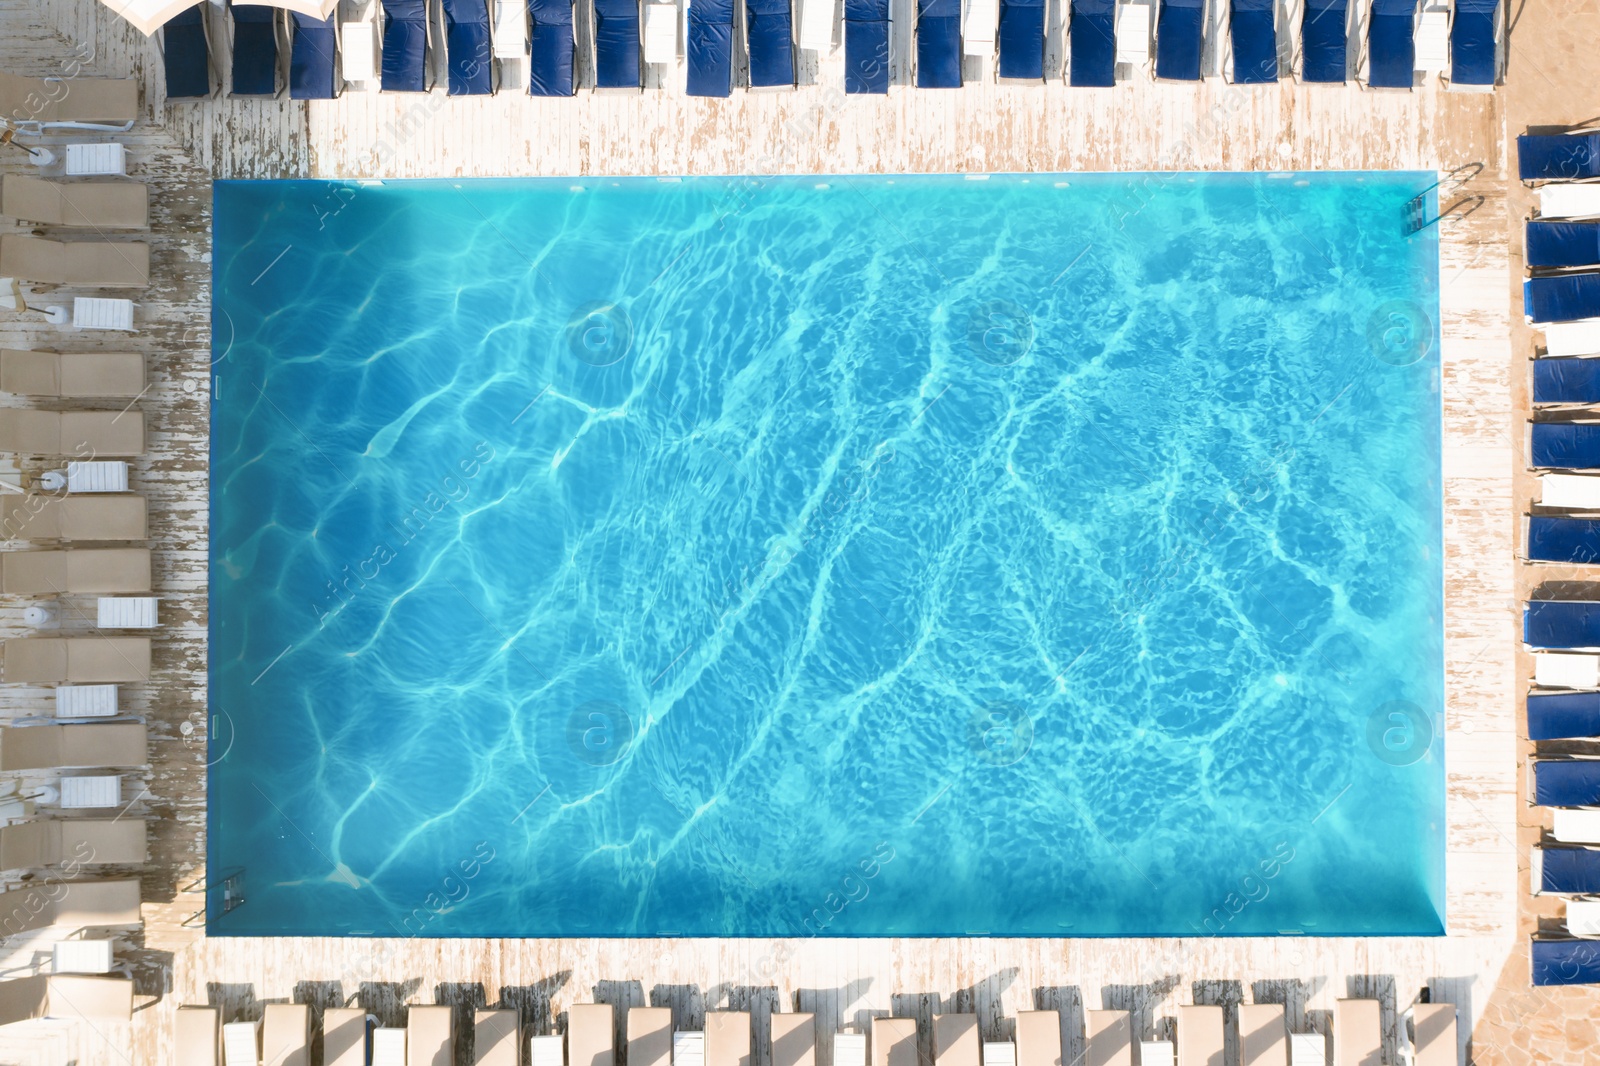 Image of Sun lounge chairs near swimming pool, top view